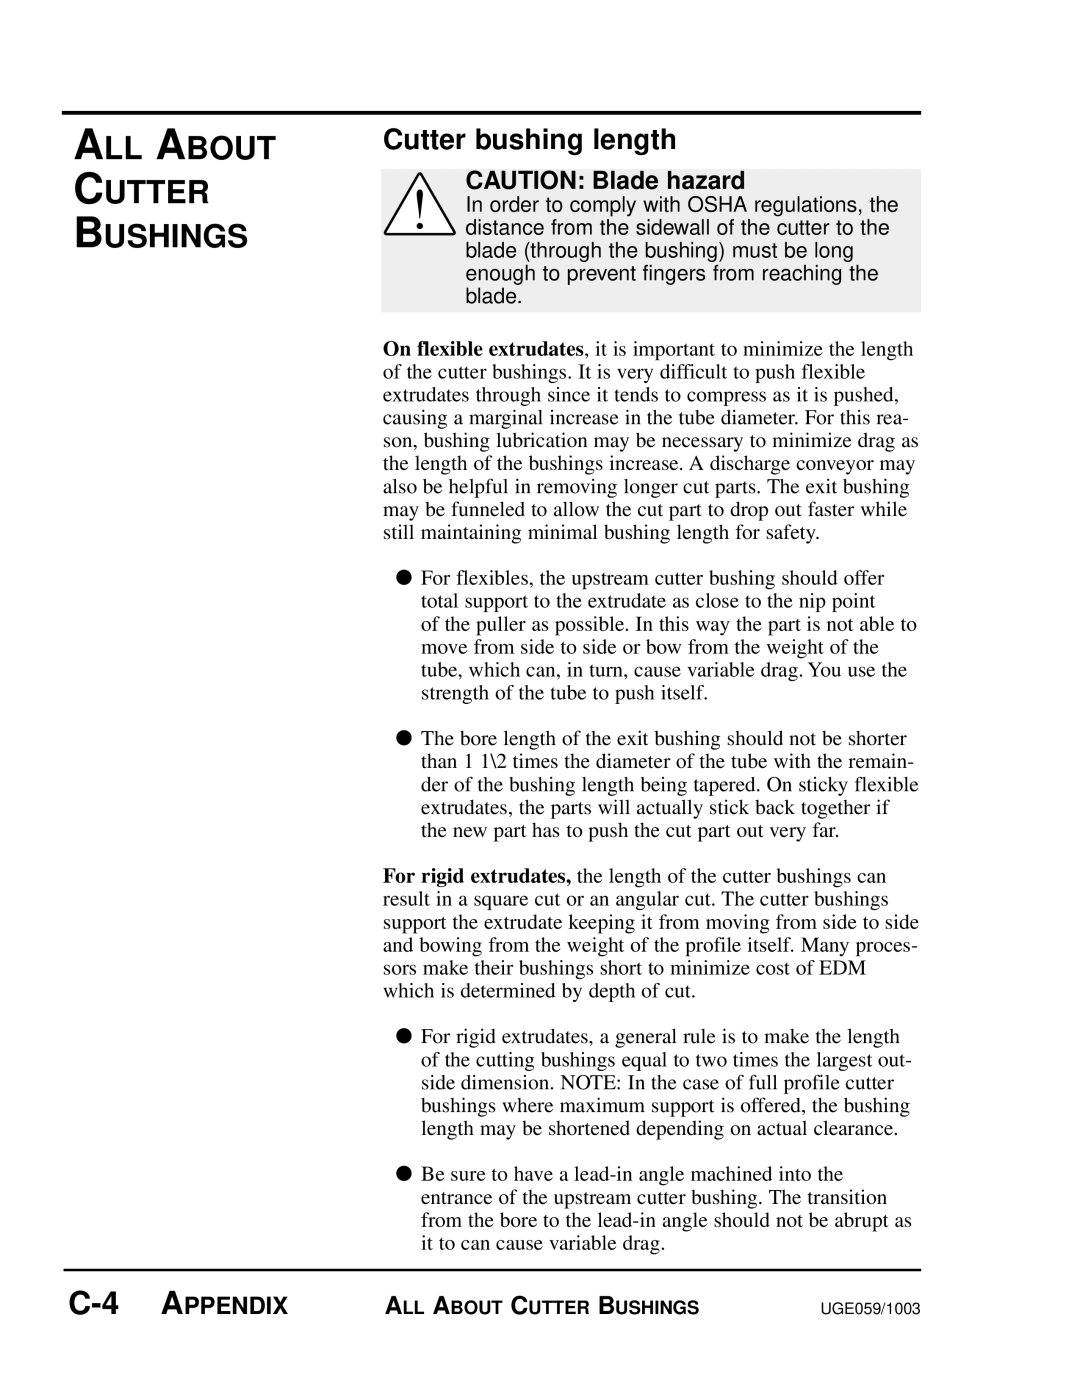 Conair SC-5 manual Cutter bushing length, CAUTION Blade hazard, C-4 APPENDIX, All About Cutter Bushings 